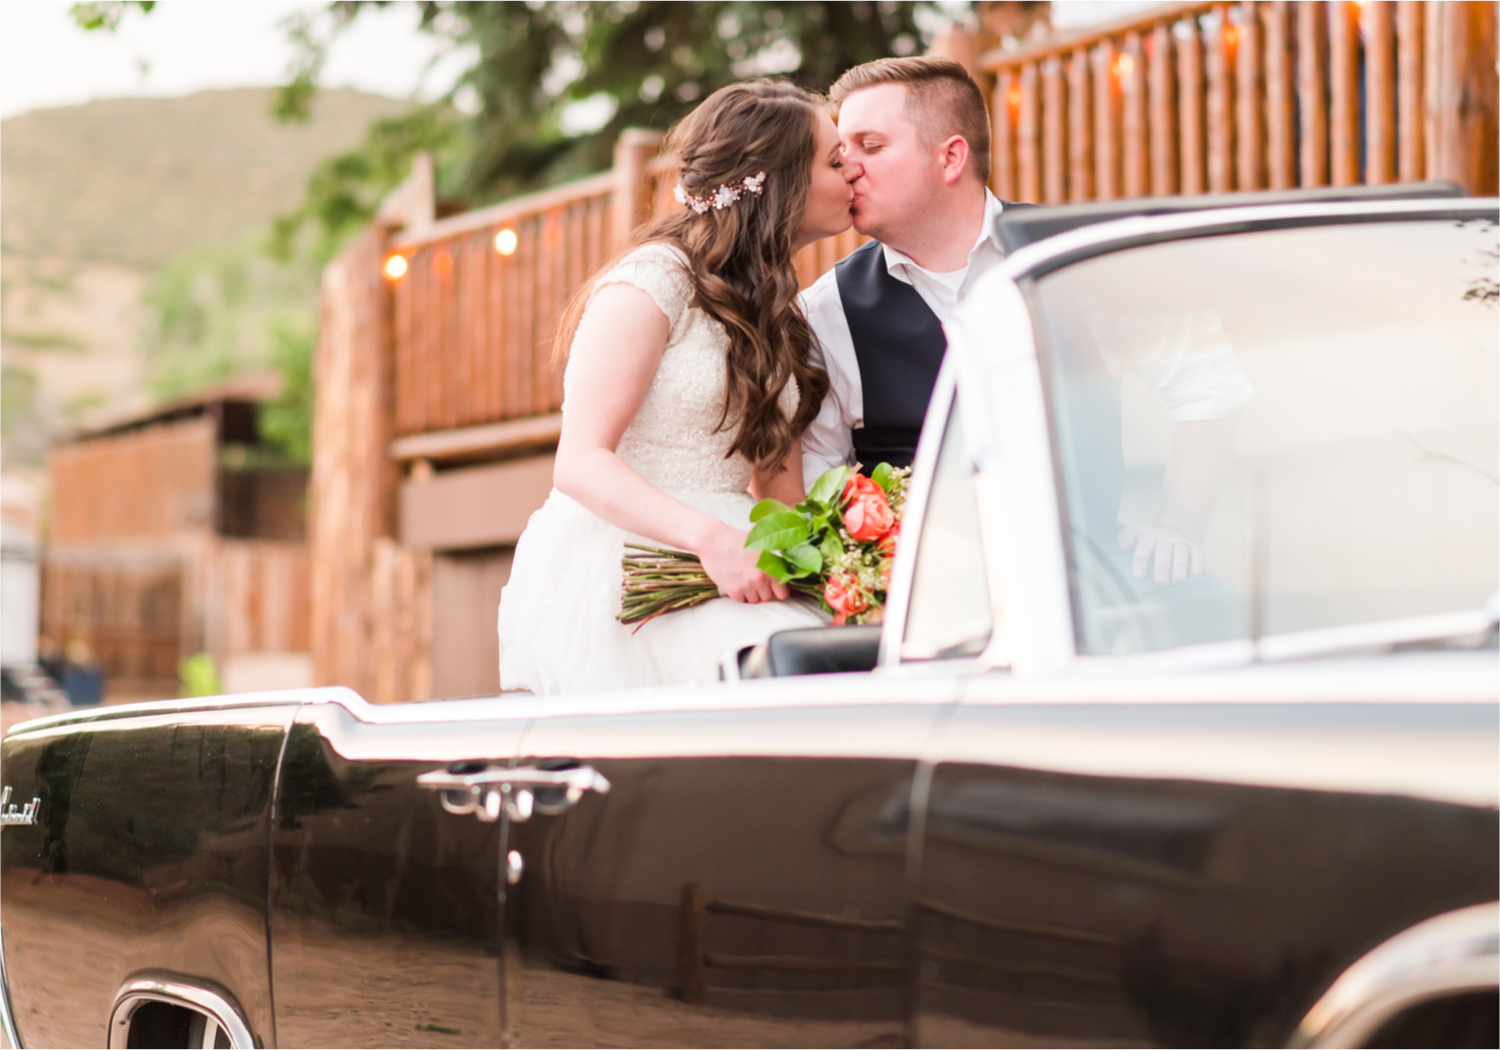 Summer Ellis Ranch Wedding in Loveland Colorado | Britni Girard Photography | Wedding Photo and Video Team | Classic Car Exit